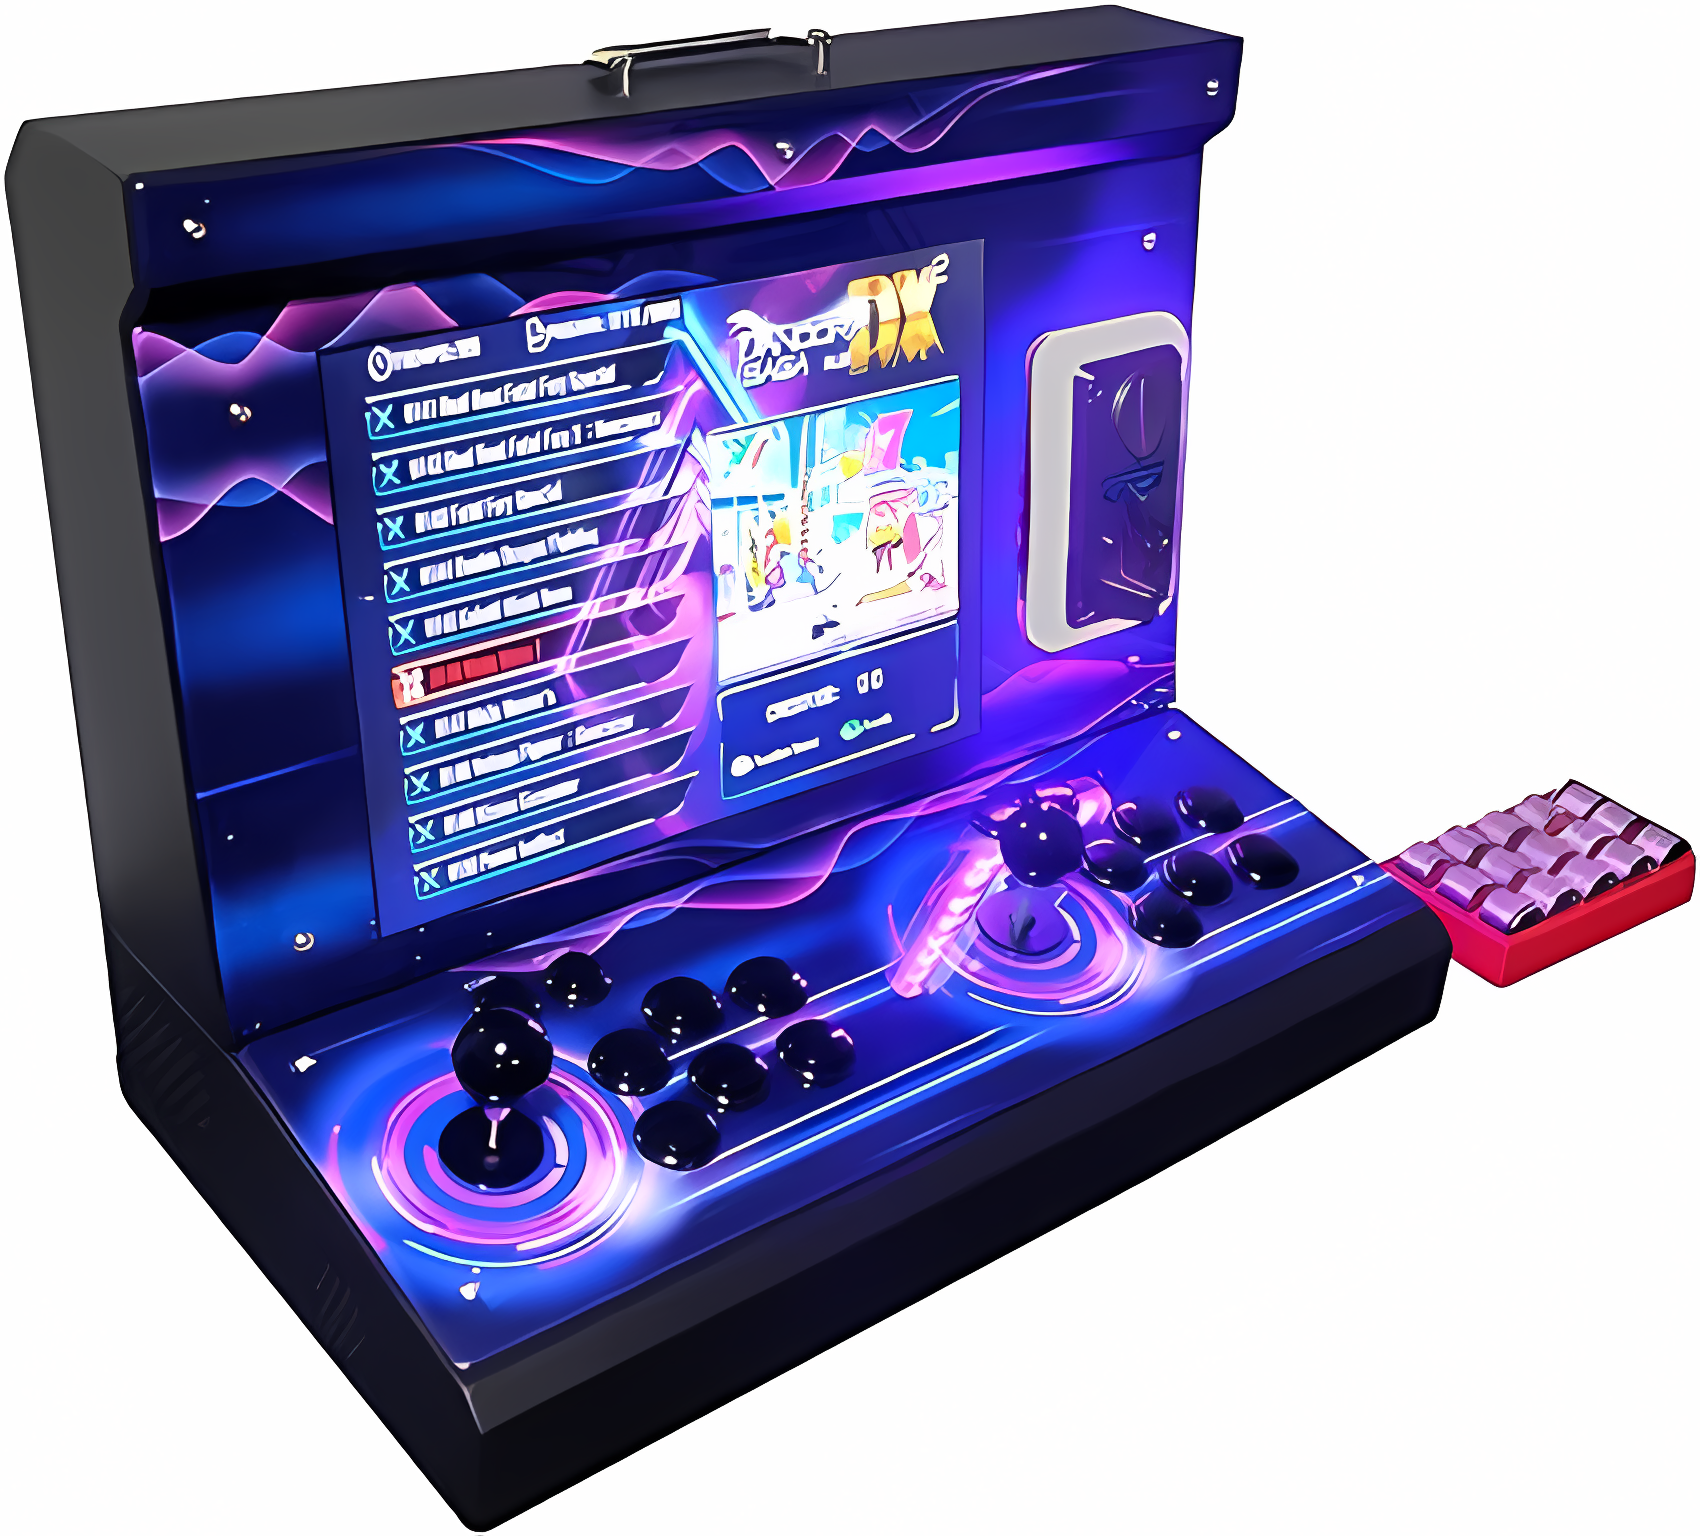 Maquina Arcade Recreativa bartop Pandora BOX 3D SUPER MARIO